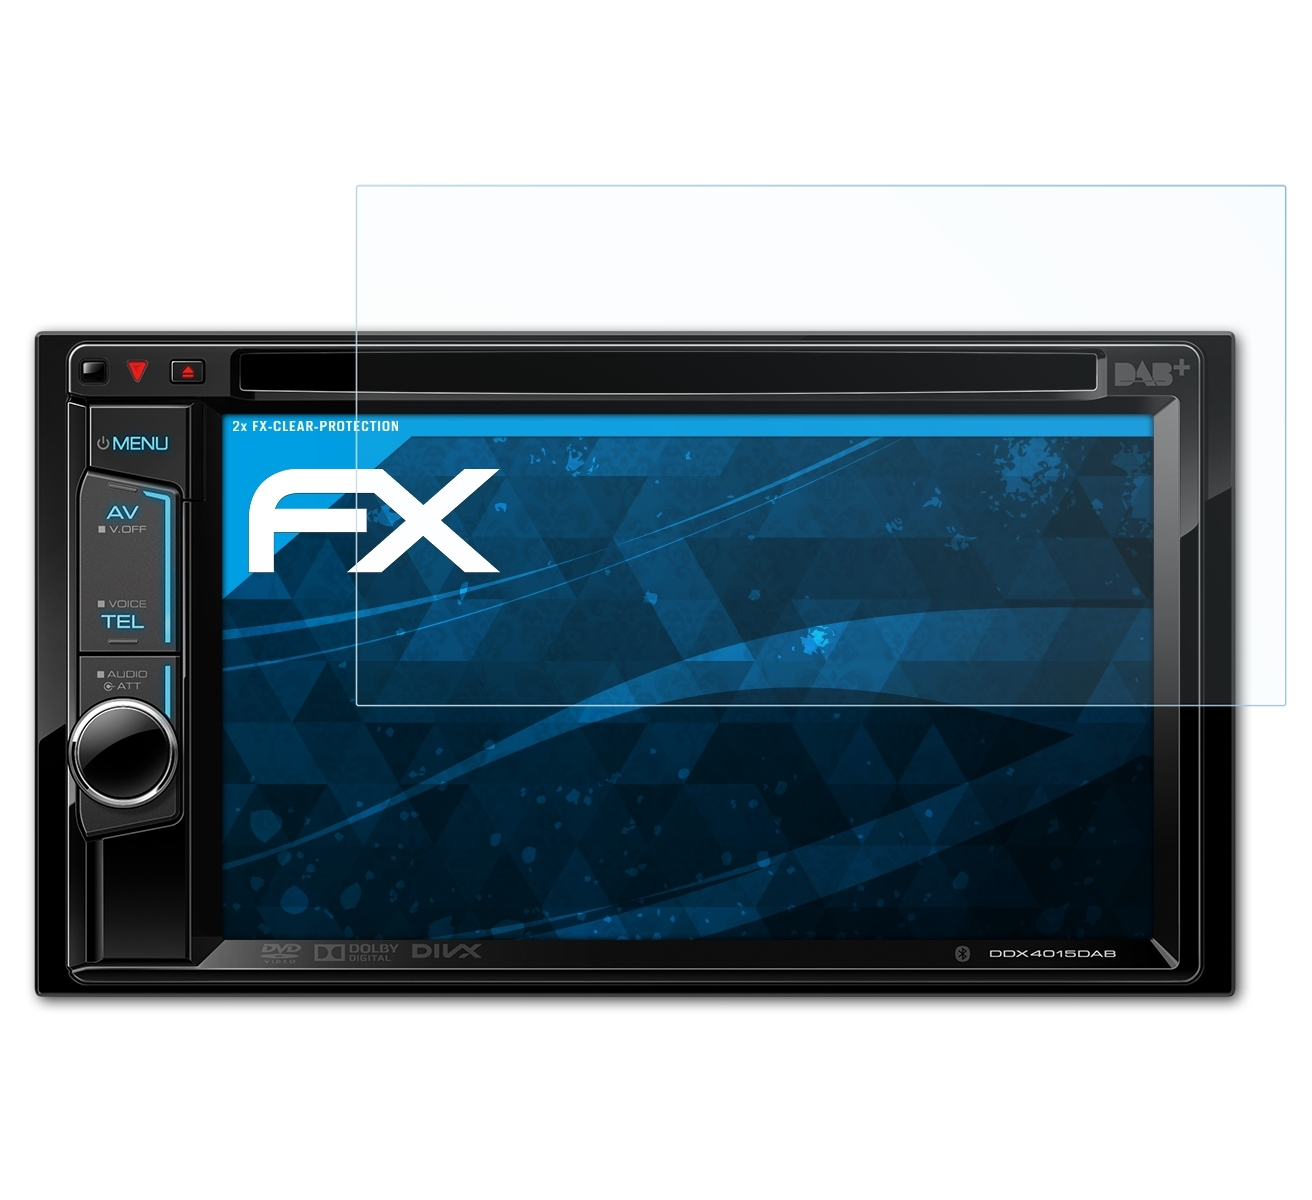 ATFOLIX 2x Displayschutz(für Kenwood DDX4015DAB 4016DAB) FX-Clear /